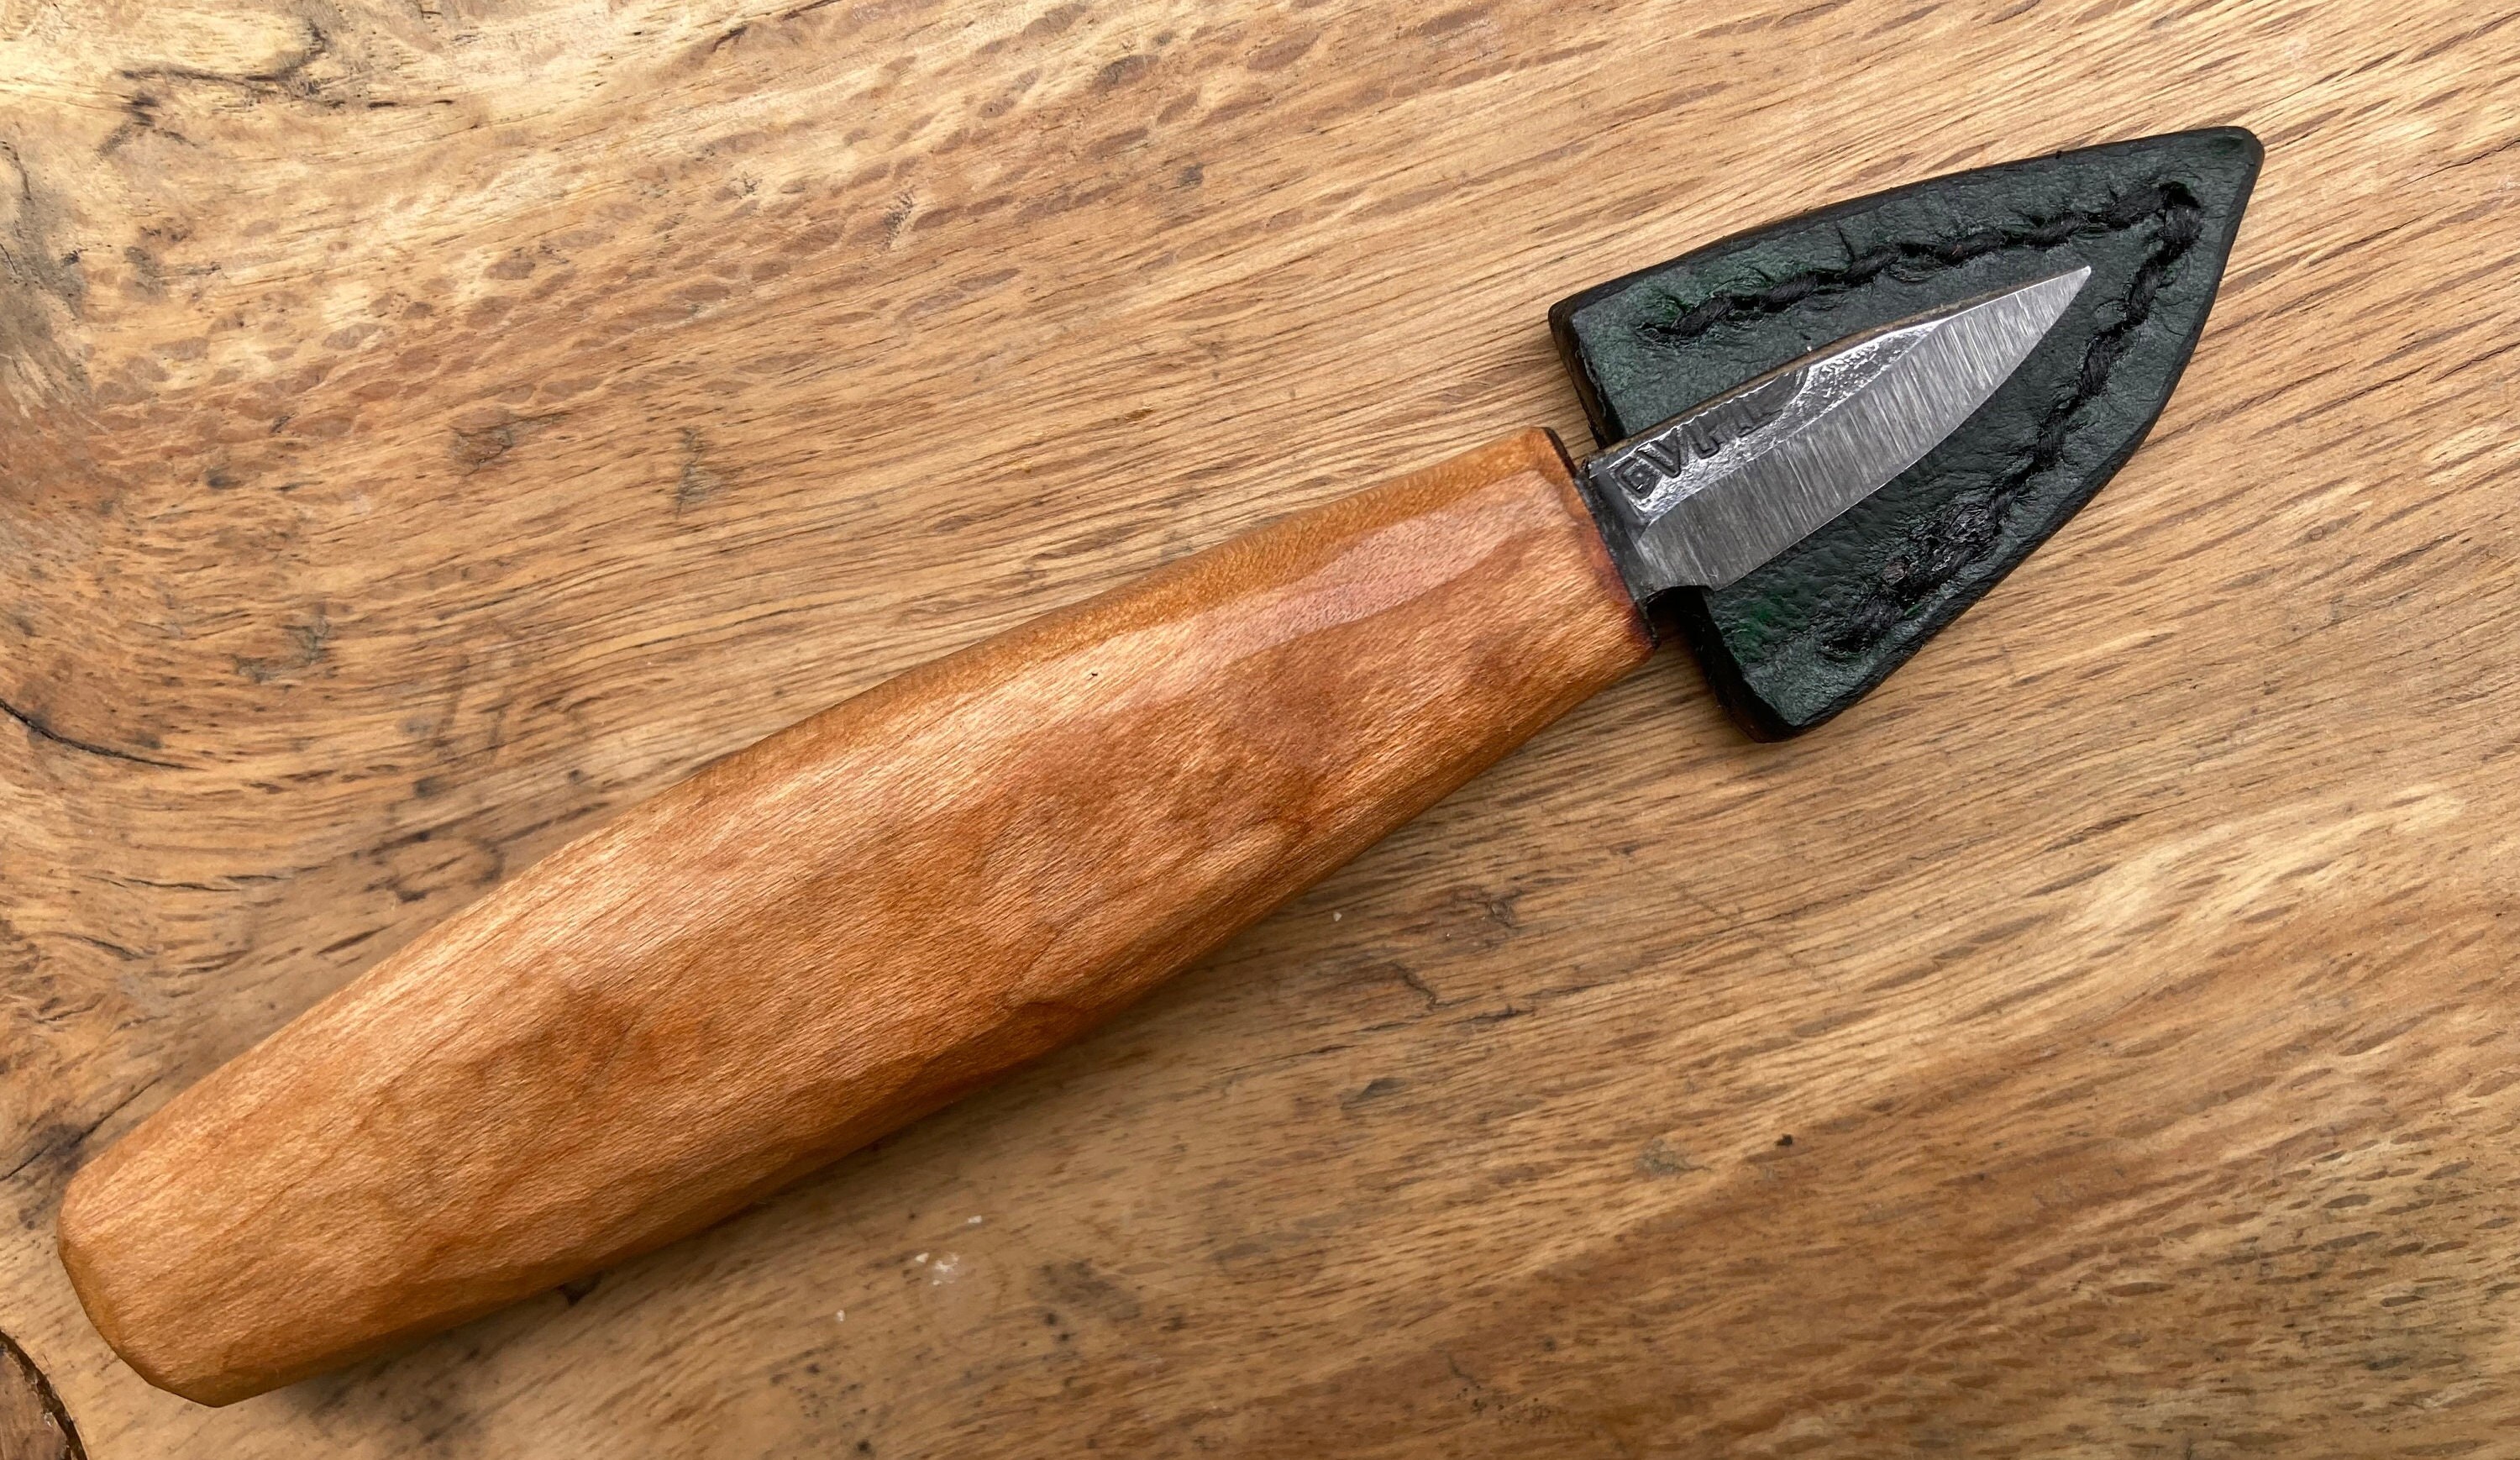 Sloyd blade Type 01  James Wood Blacksmith